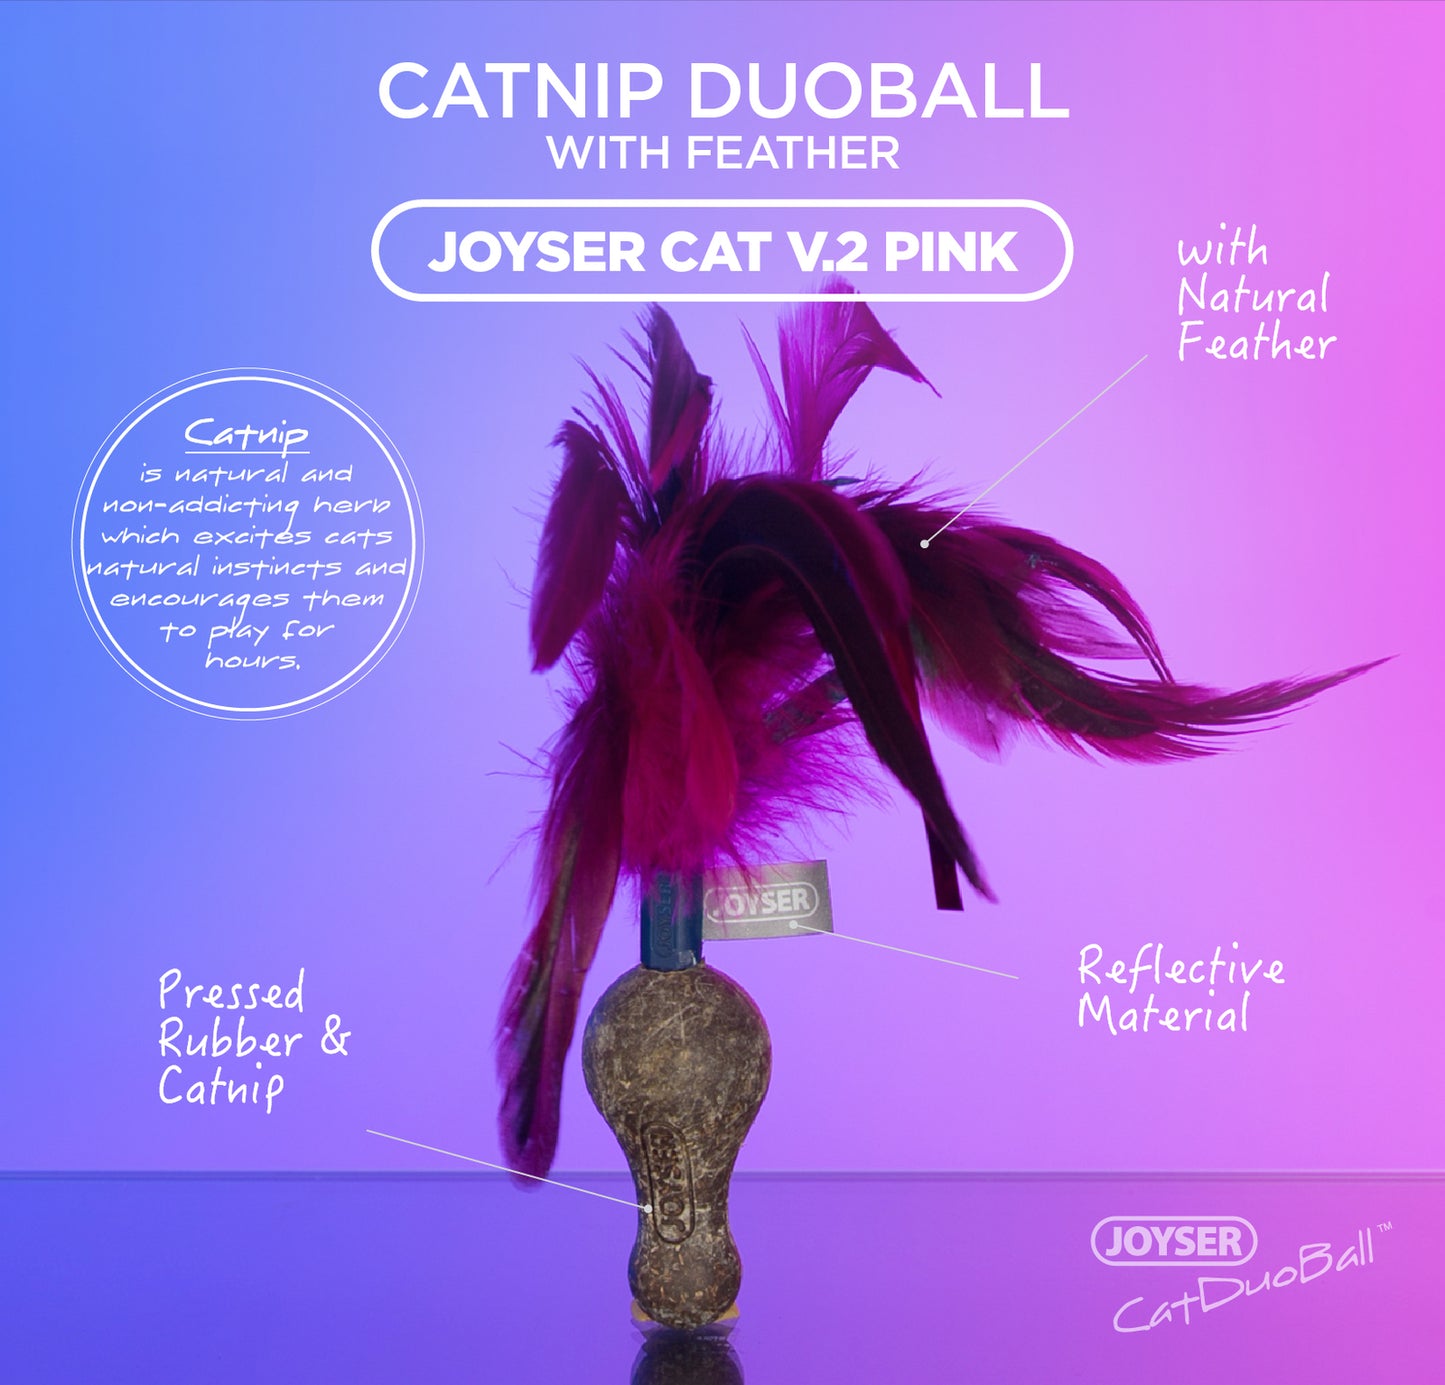 JOYSER Catnip Duoball with Feather Cat Toys Safet